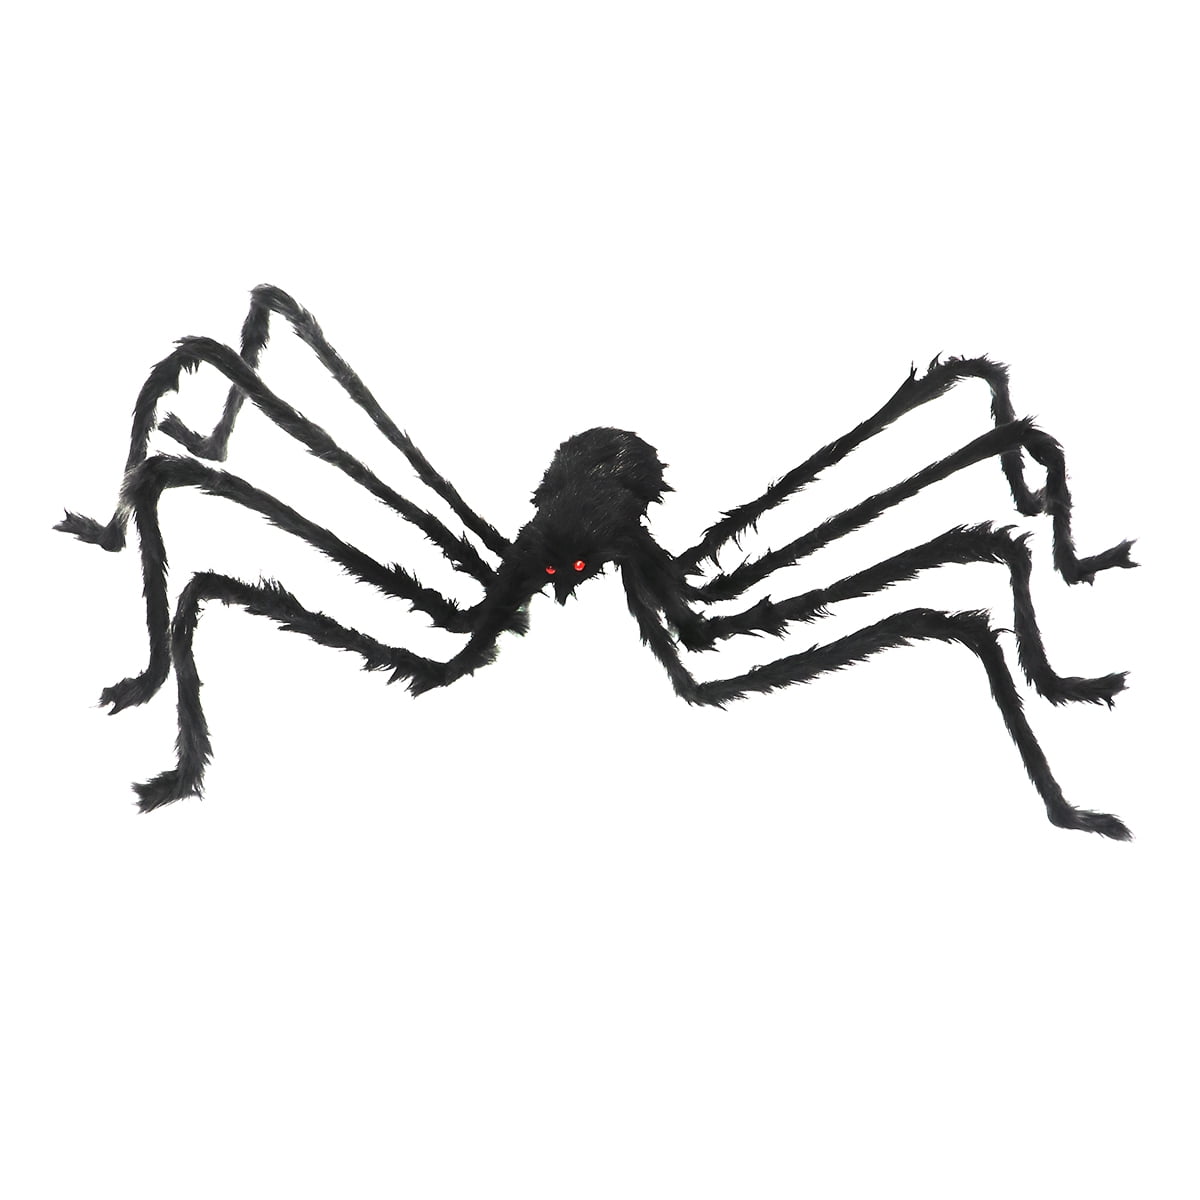 NEW 2 Creepy Big Black Plastic Spiders on Elastic 7cm Halloween Party Prop 